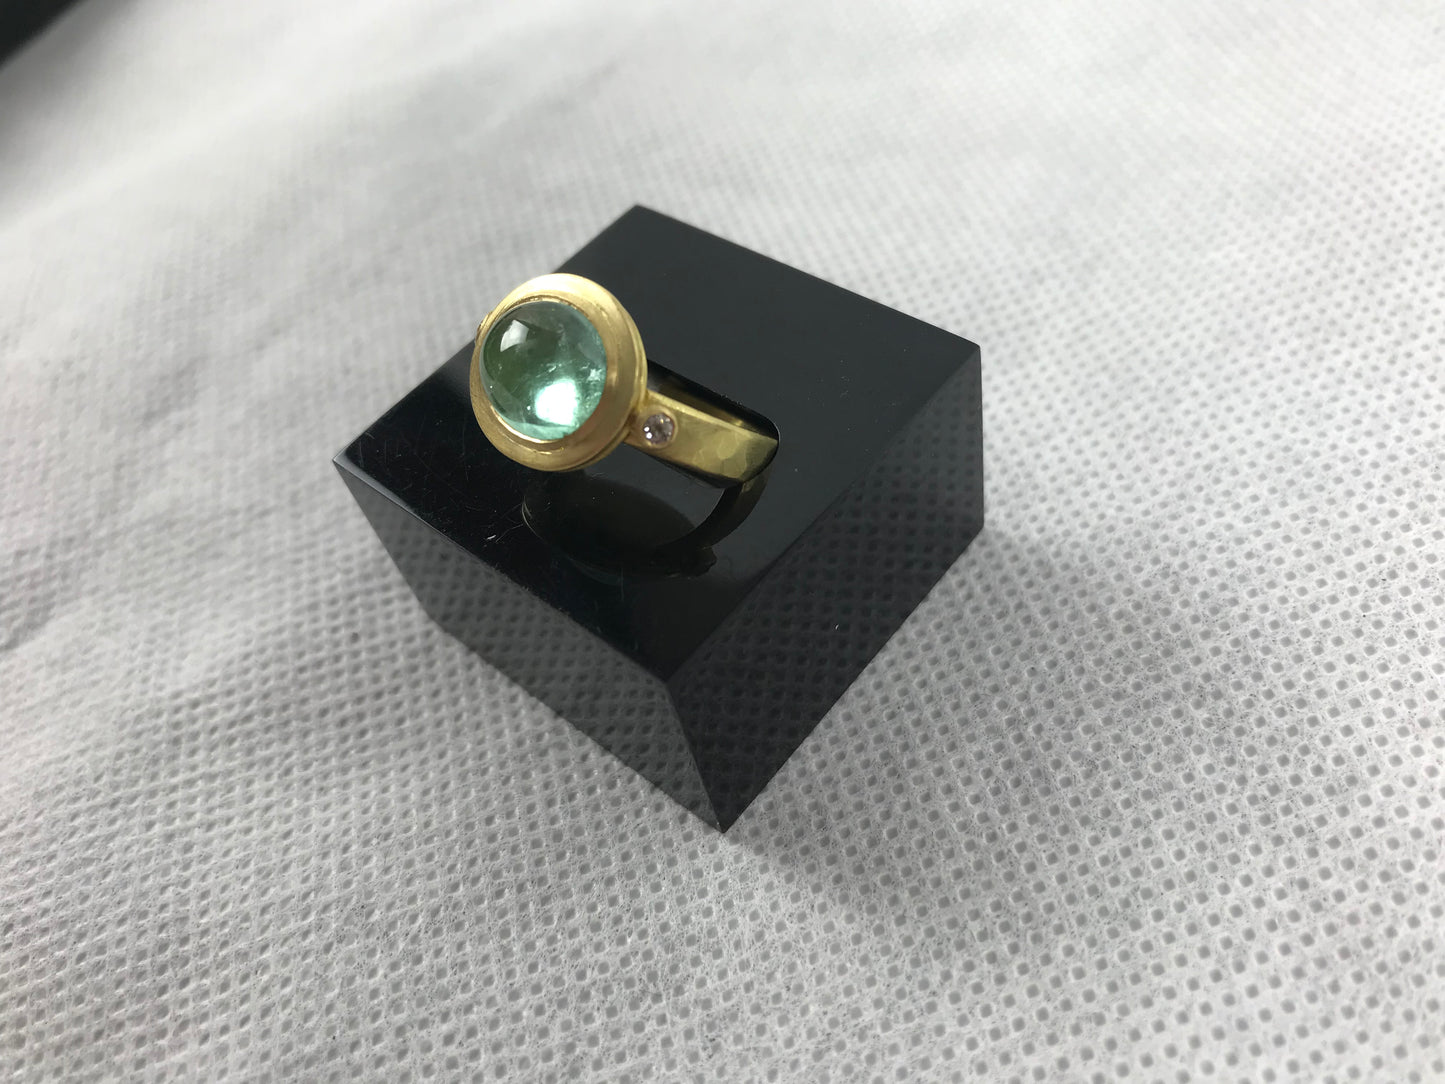 Scott-Moncrieff, Jean: Gold, green tourmaline and diamond ring